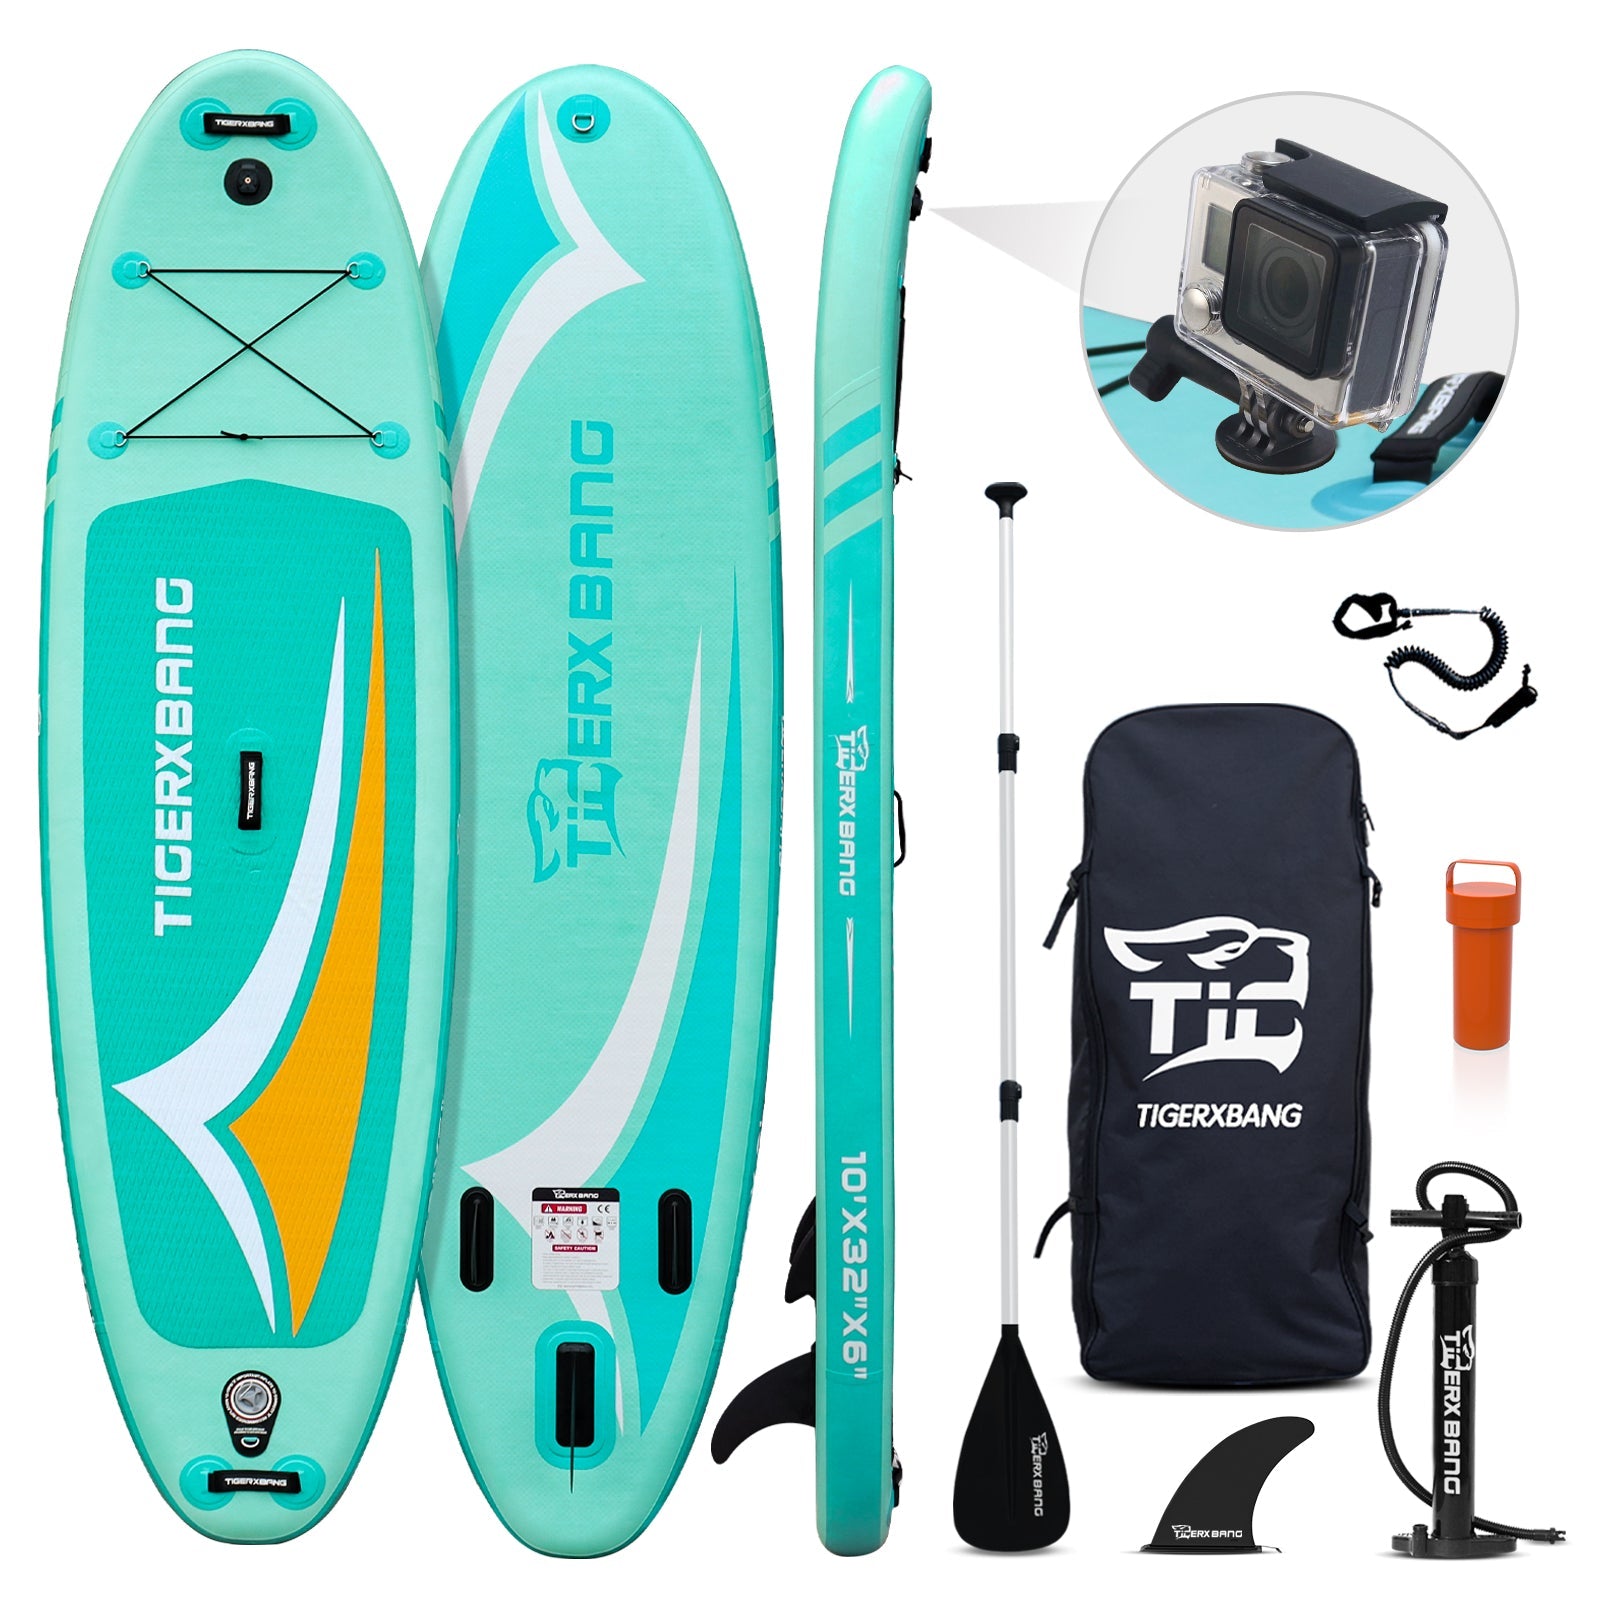 TIGERXBANG Blade 10' Inflatable Paddle Boards